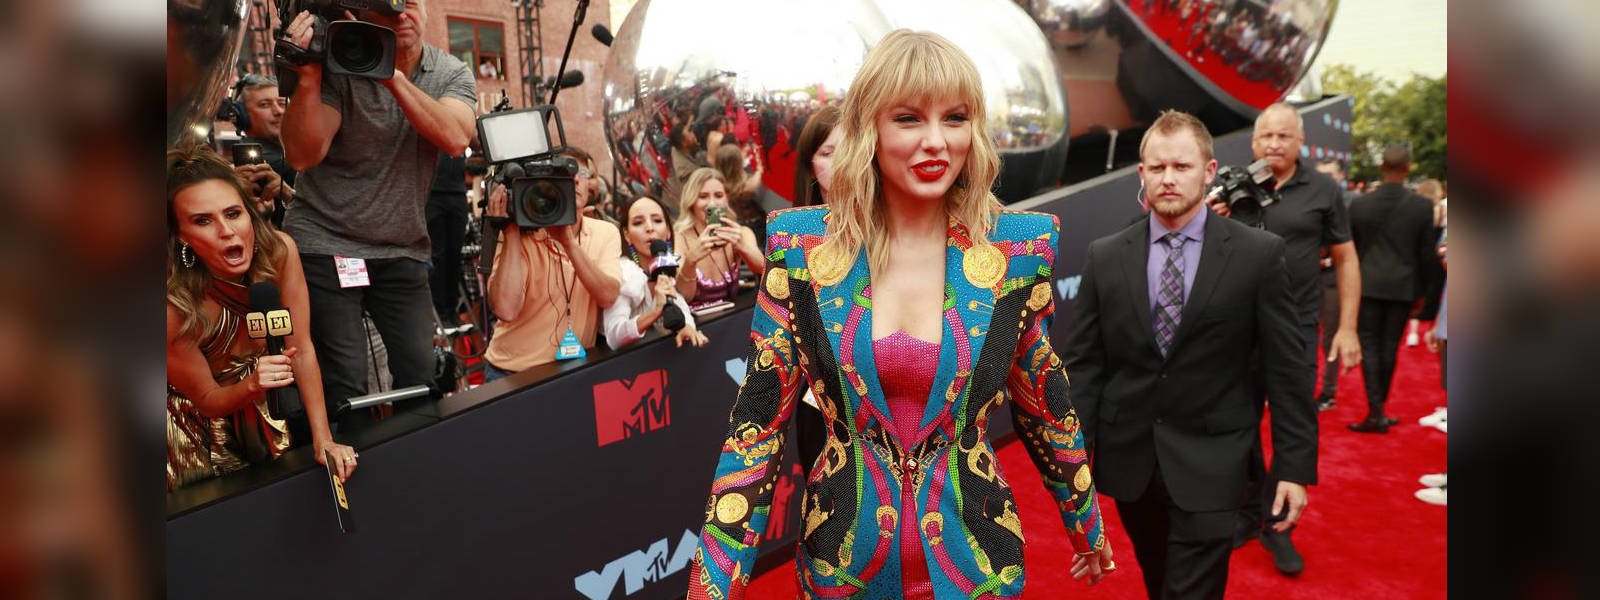 Swift, Cardi B and Missy Elliott bring girl power to Video Music Awards show